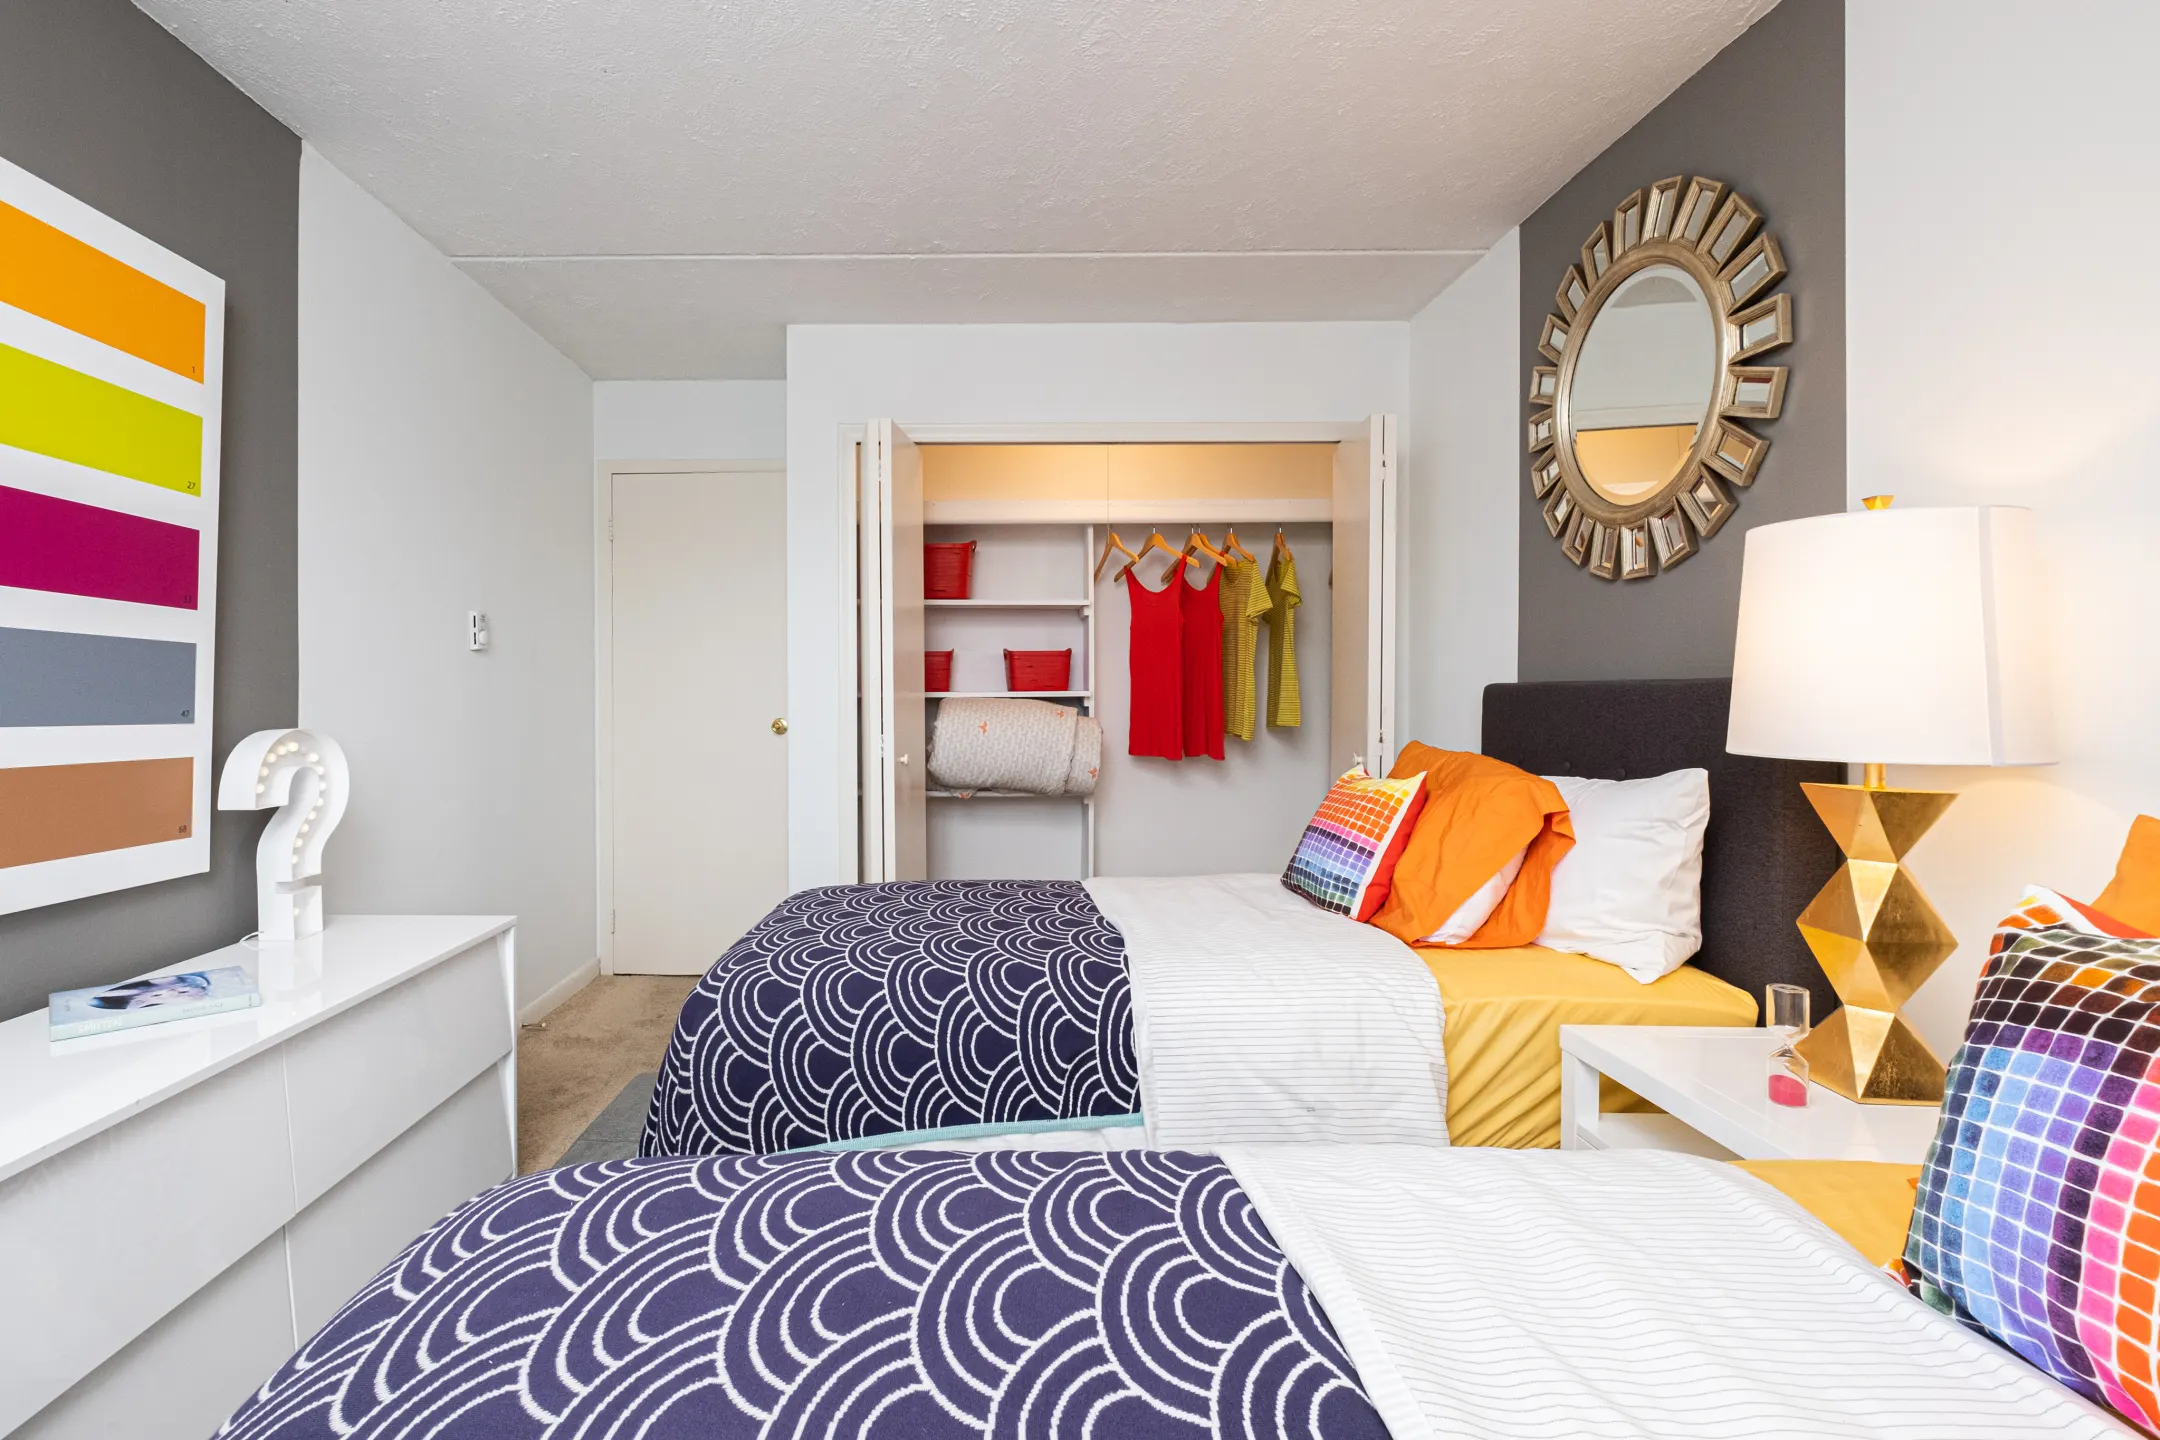 Bedroom - Concierge Apartments - Rocky Hill, CT